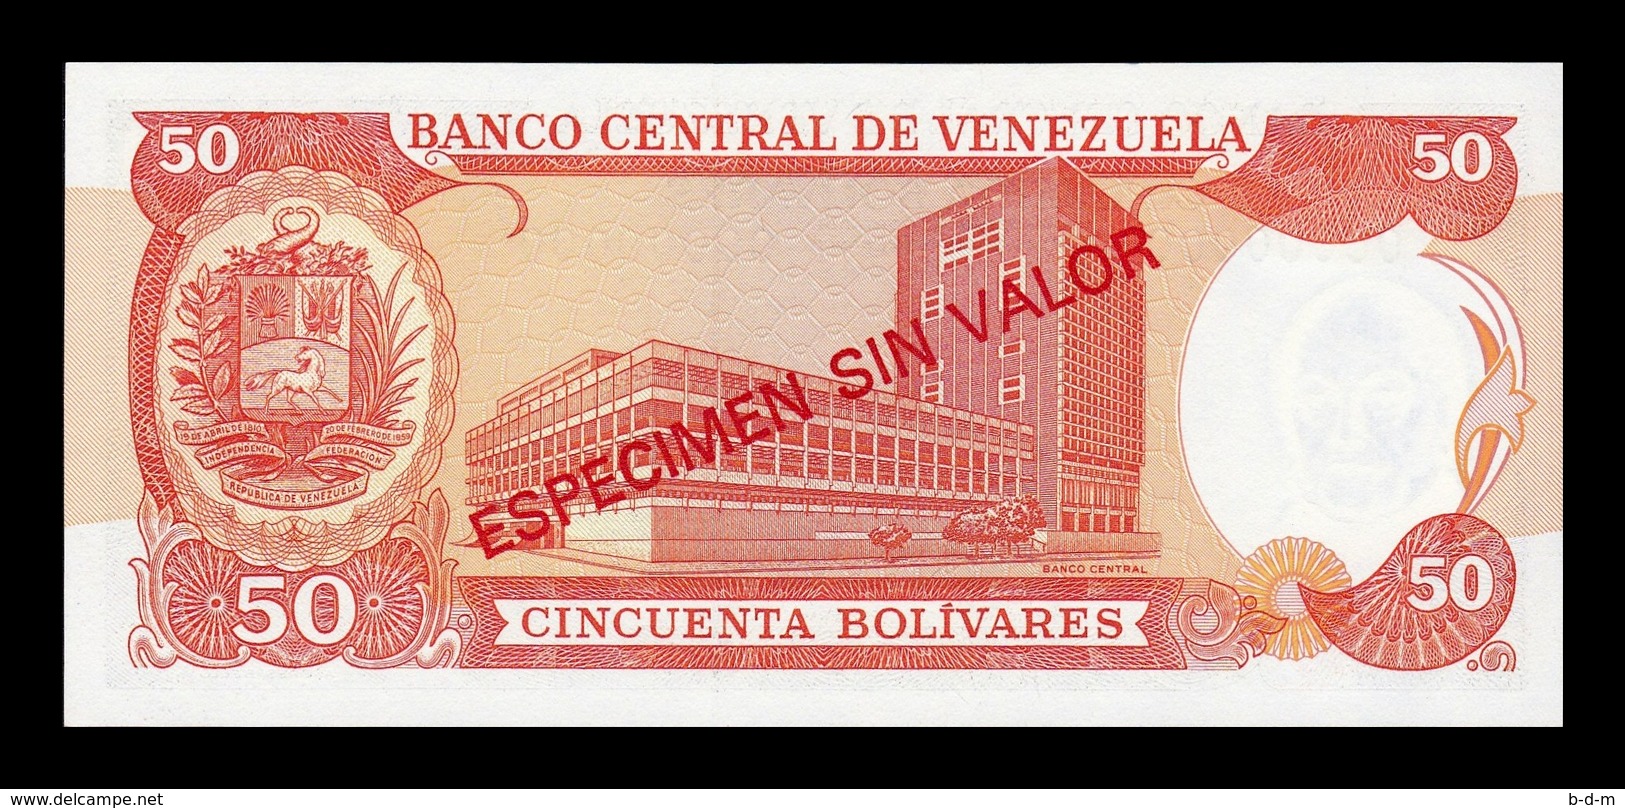 Venezuela 50 Bolívares 1998 Pick 65Fs Specimen SC UNC - Venezuela